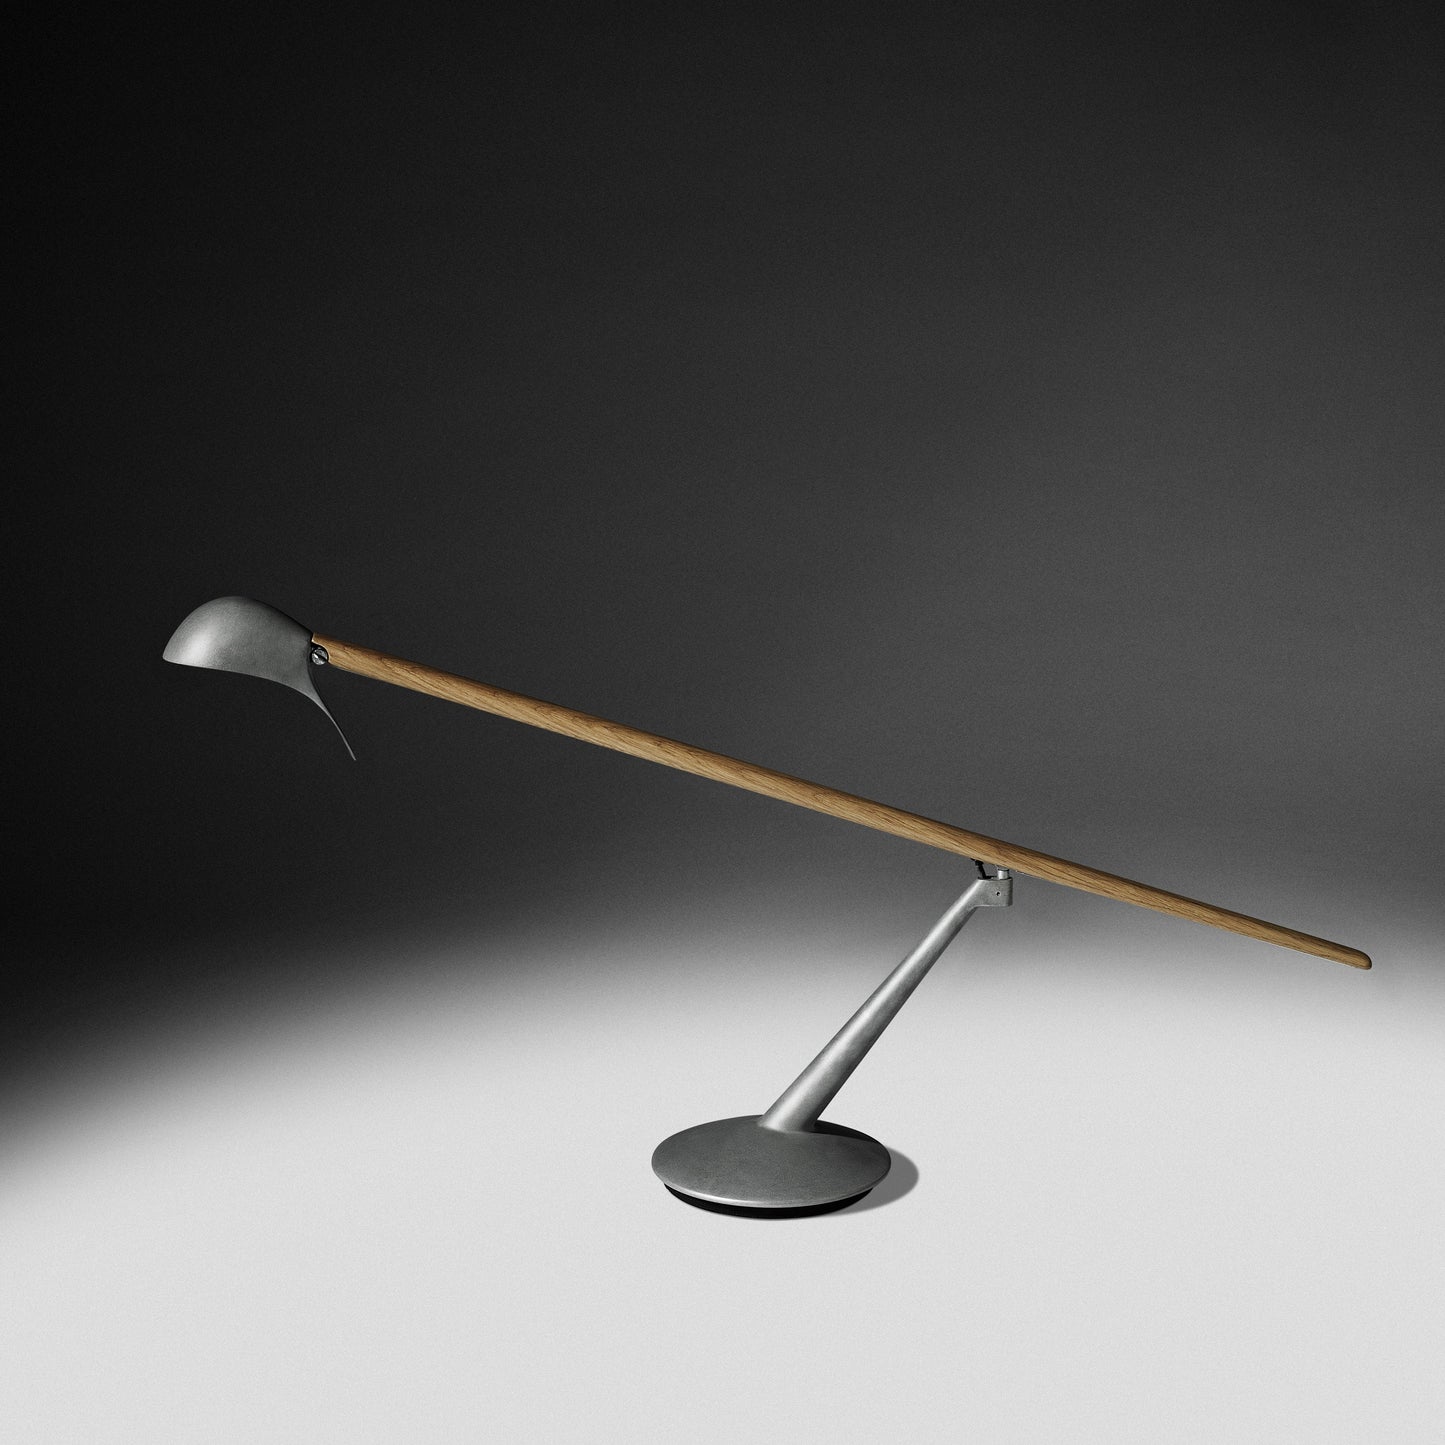 Bluebird Table Lamp